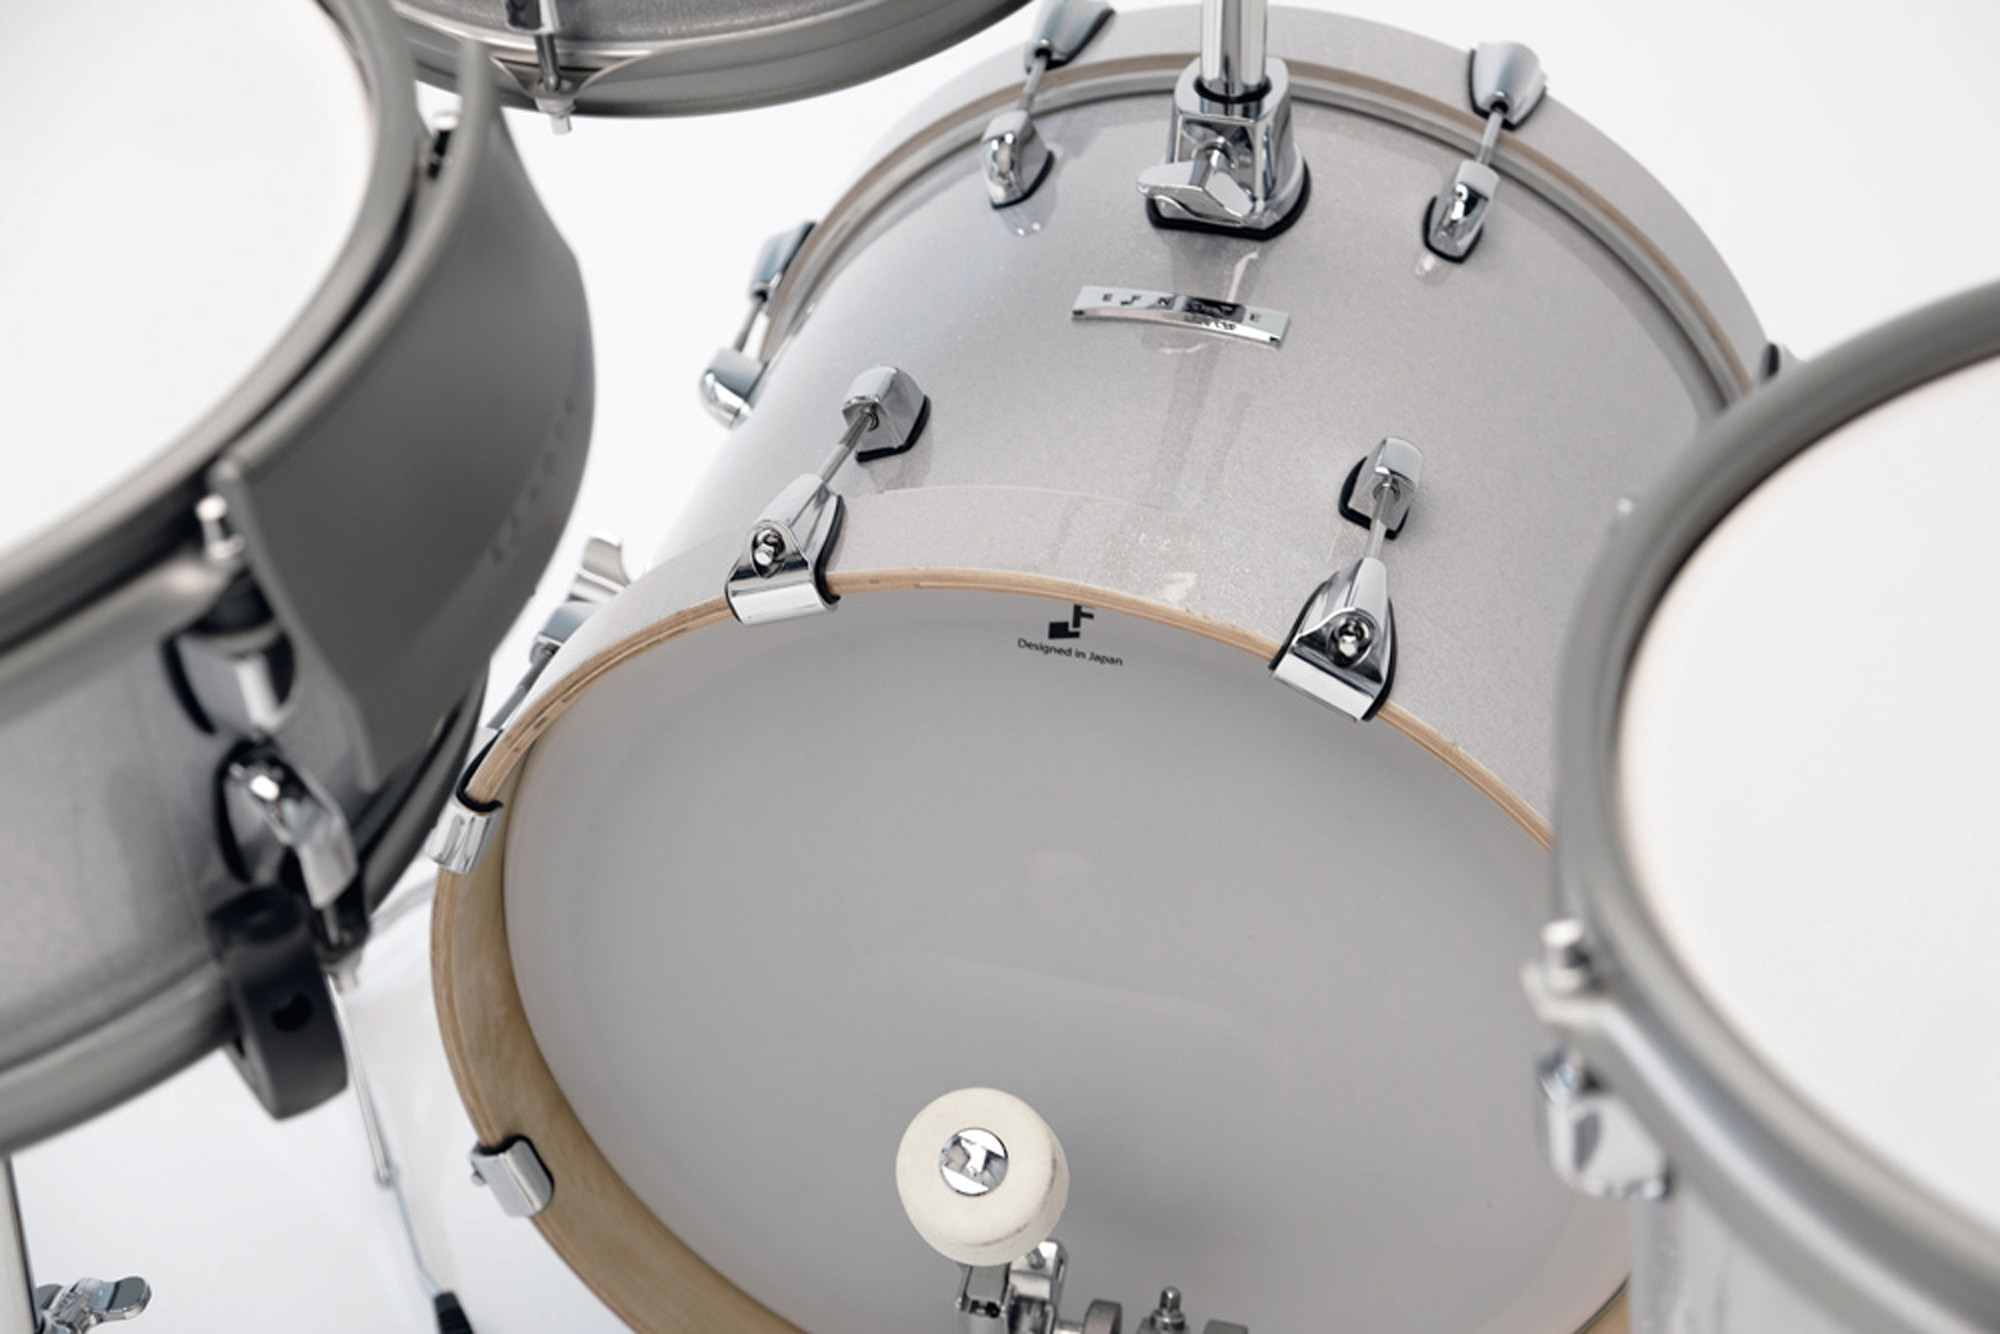 Efnote Efd5 Drum Kit - Elektronisch drumstel - Variation 4